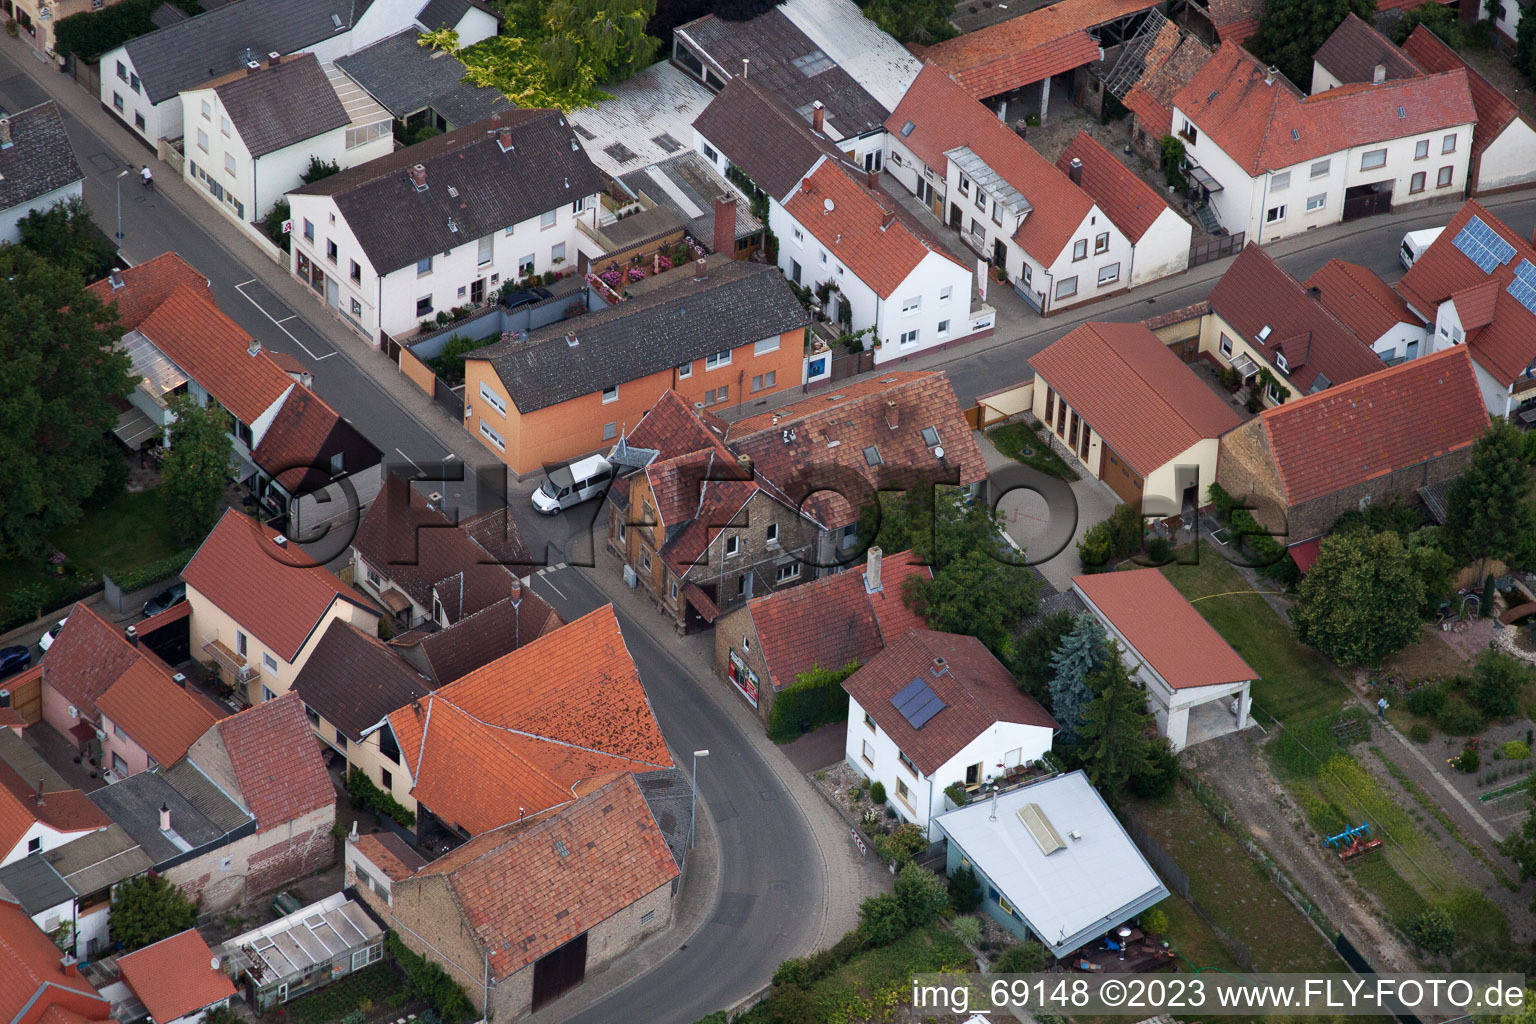 Drone image of District Bobenheim in Bobenheim-Roxheim in the state Rhineland-Palatinate, Germany